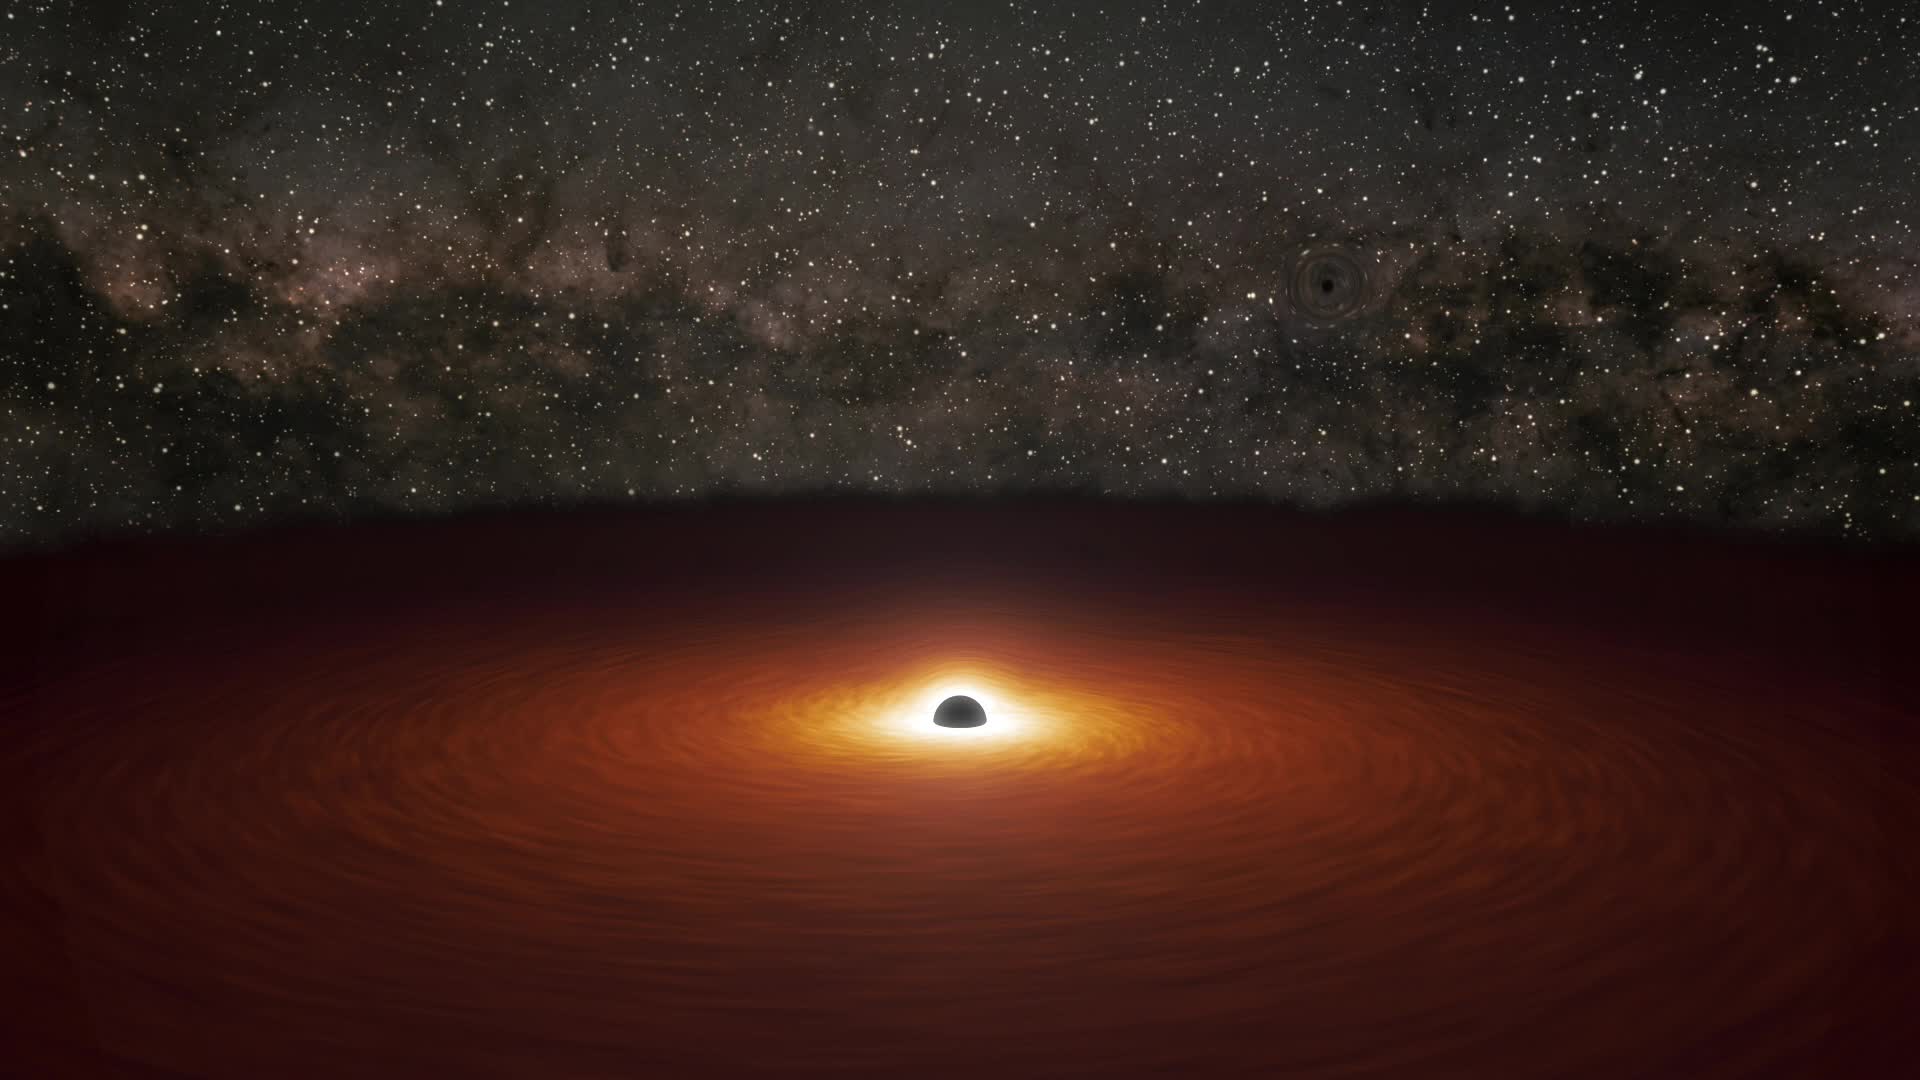 OJ 287 черная дыра